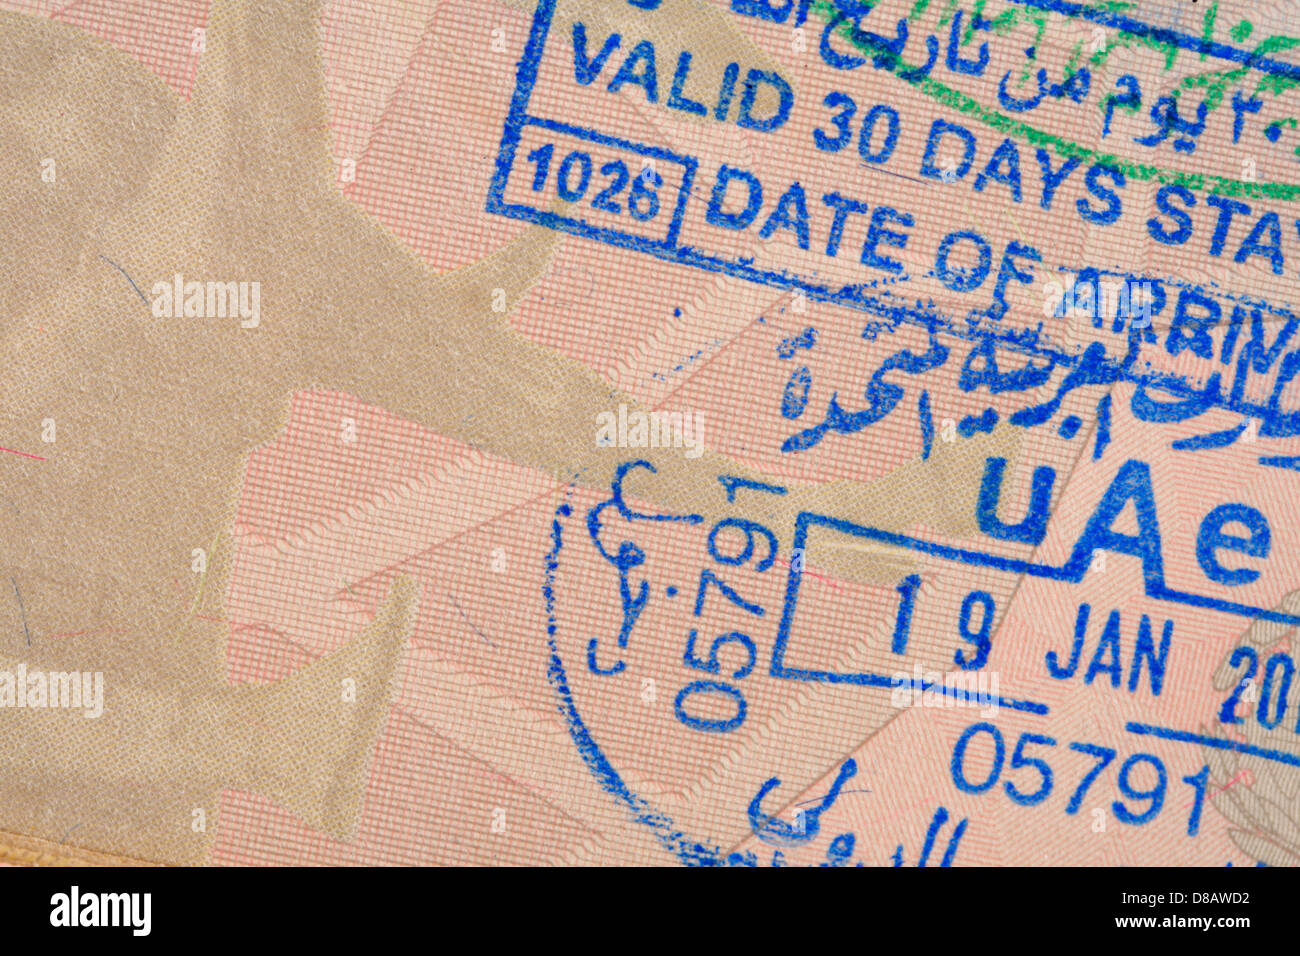 Passport stamps for Dubai, United Arab Emirates Stock Photo